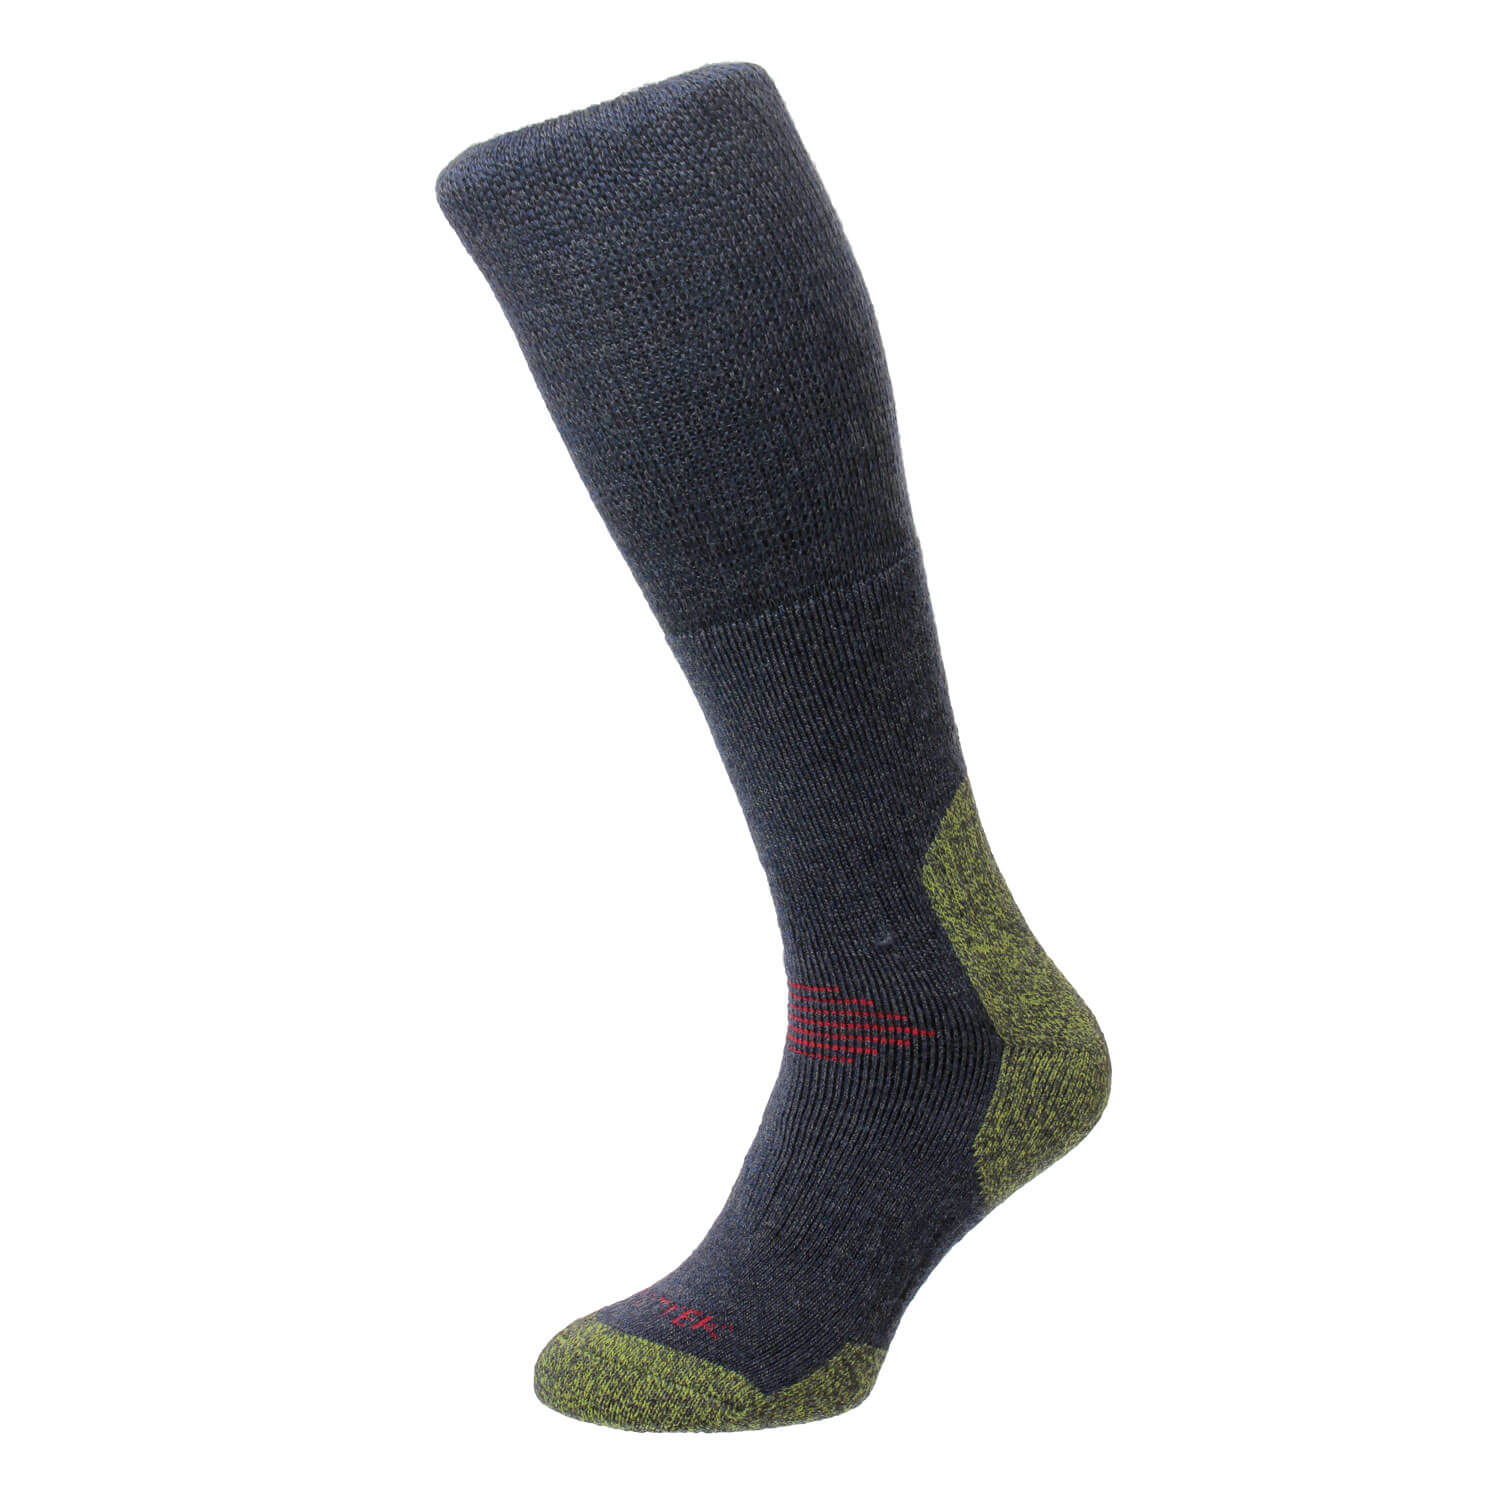 Protrek Mountain Comfort Top Socks - Navy Lime 1 Shaws Department Stores